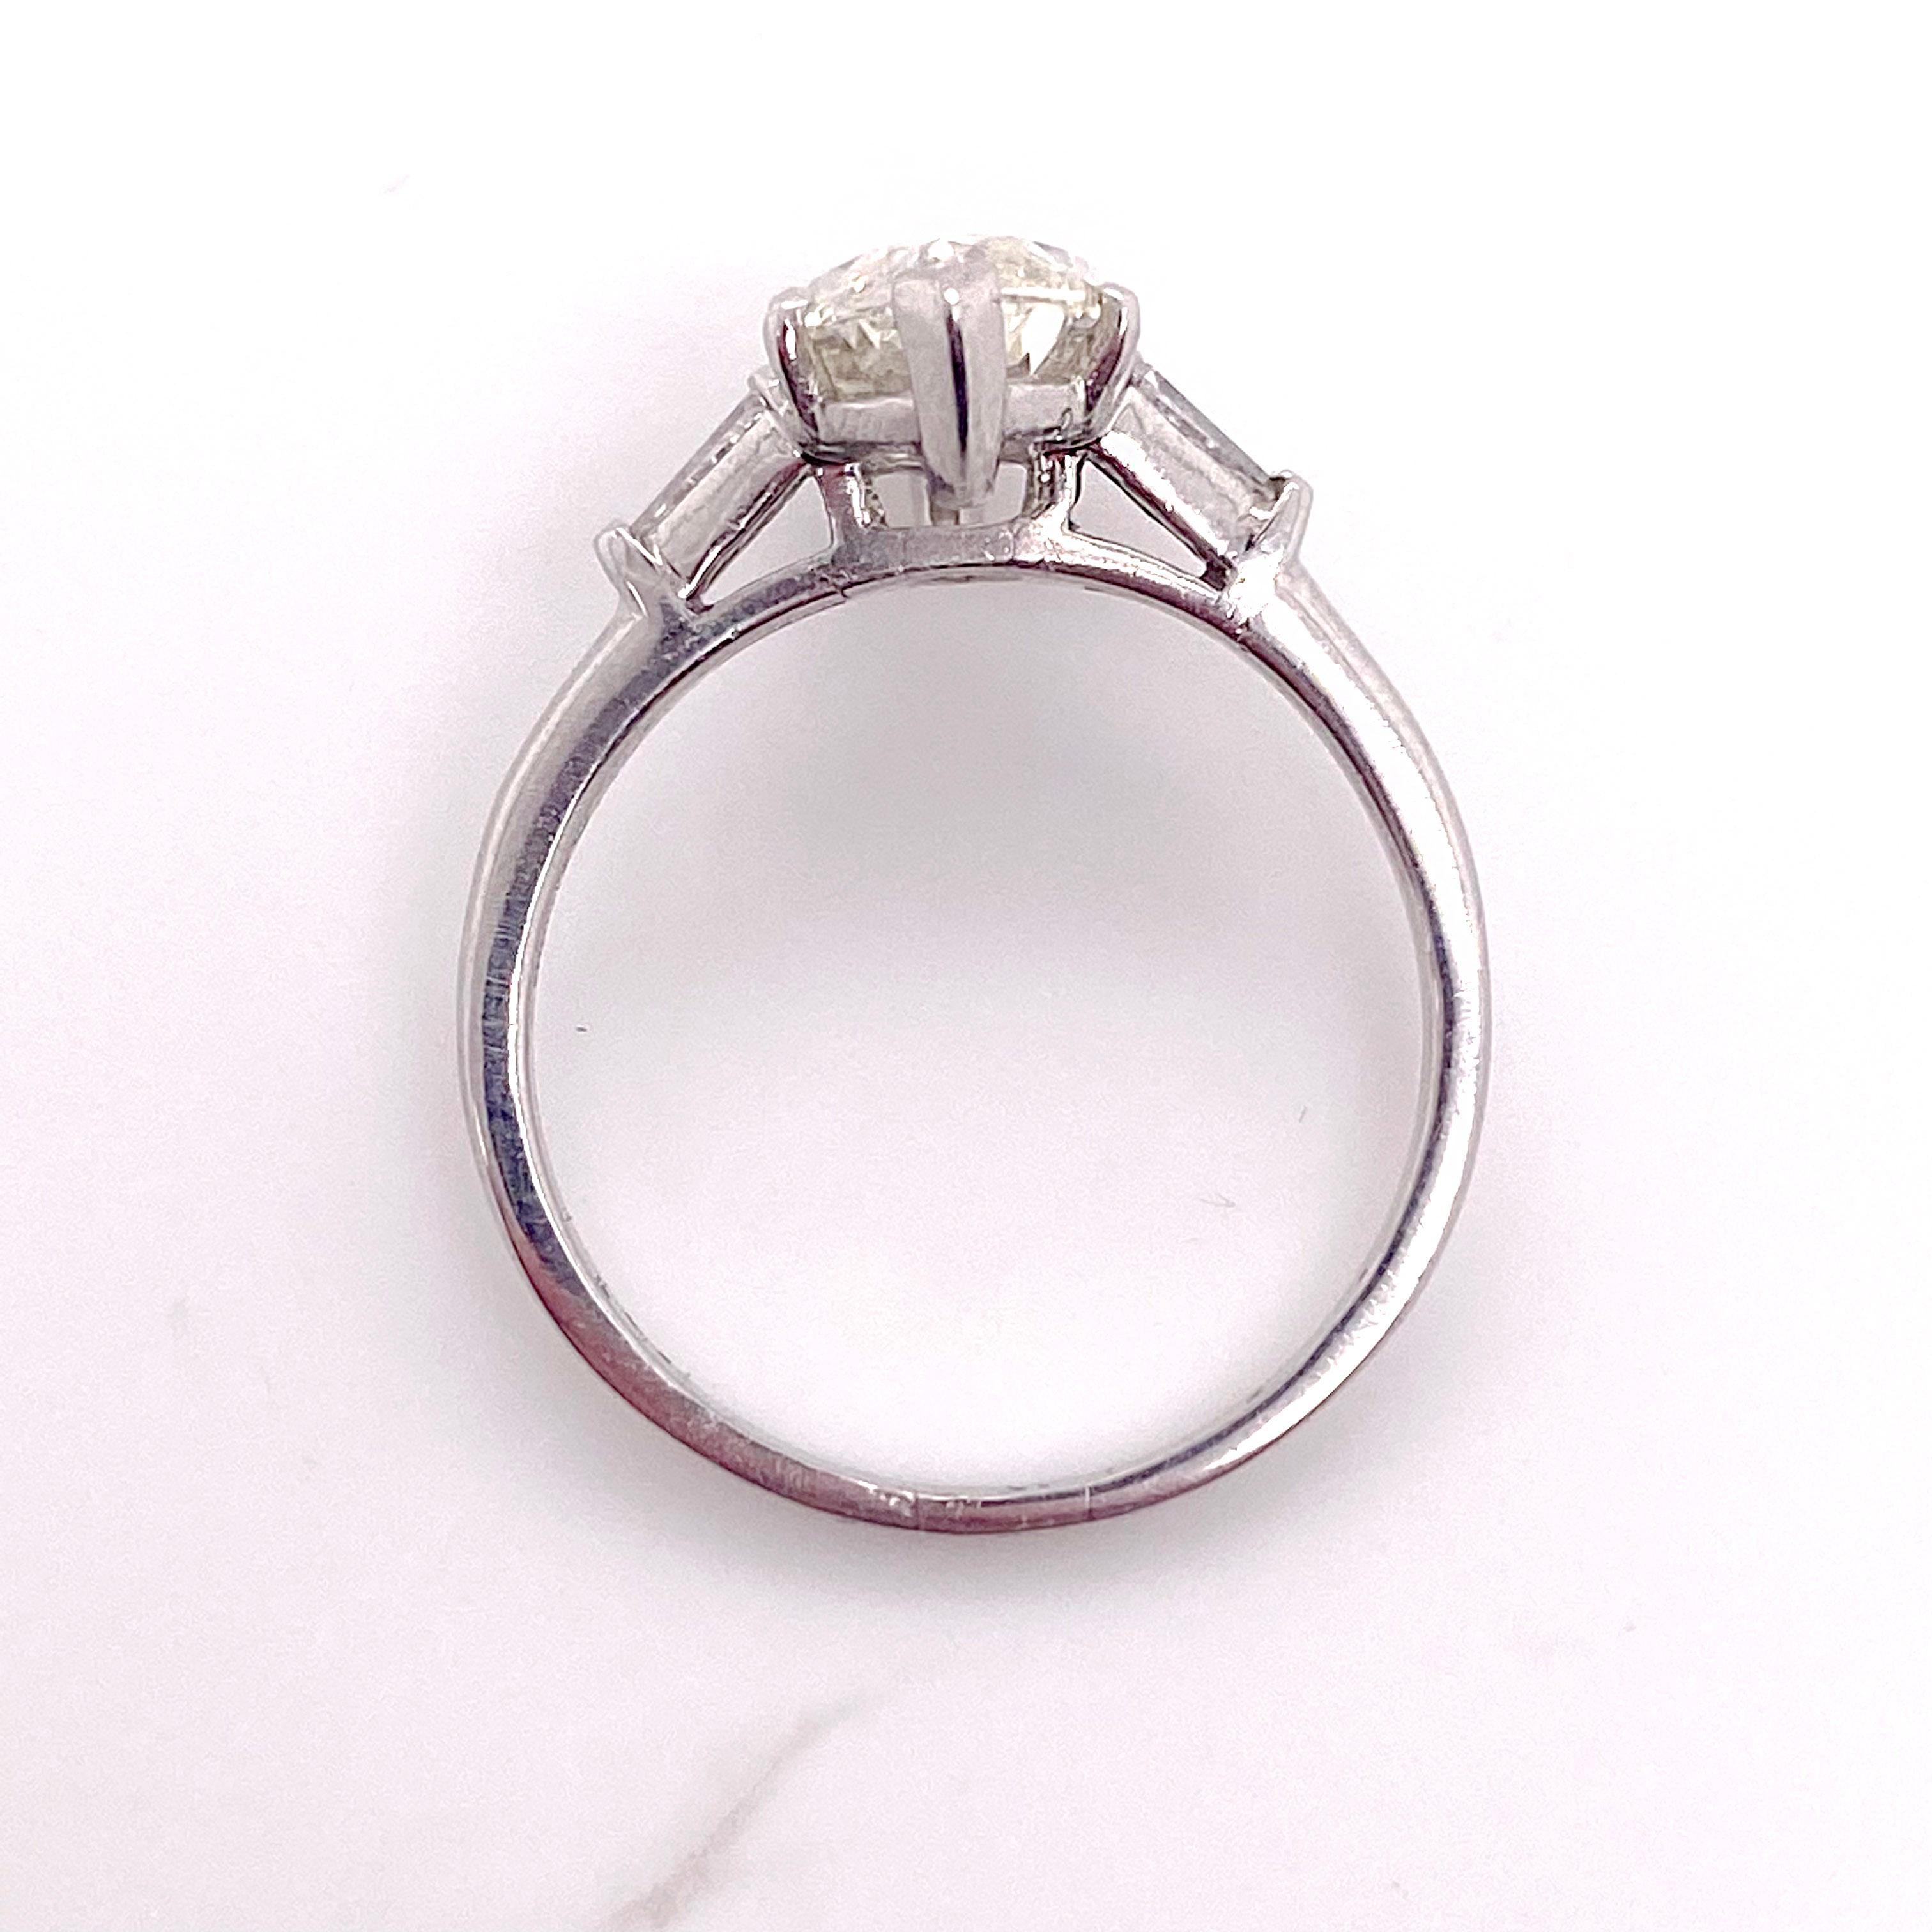 2.5 Carat Diamond Engagement Ring, Three Stone Ring, Platinum For Sale ...